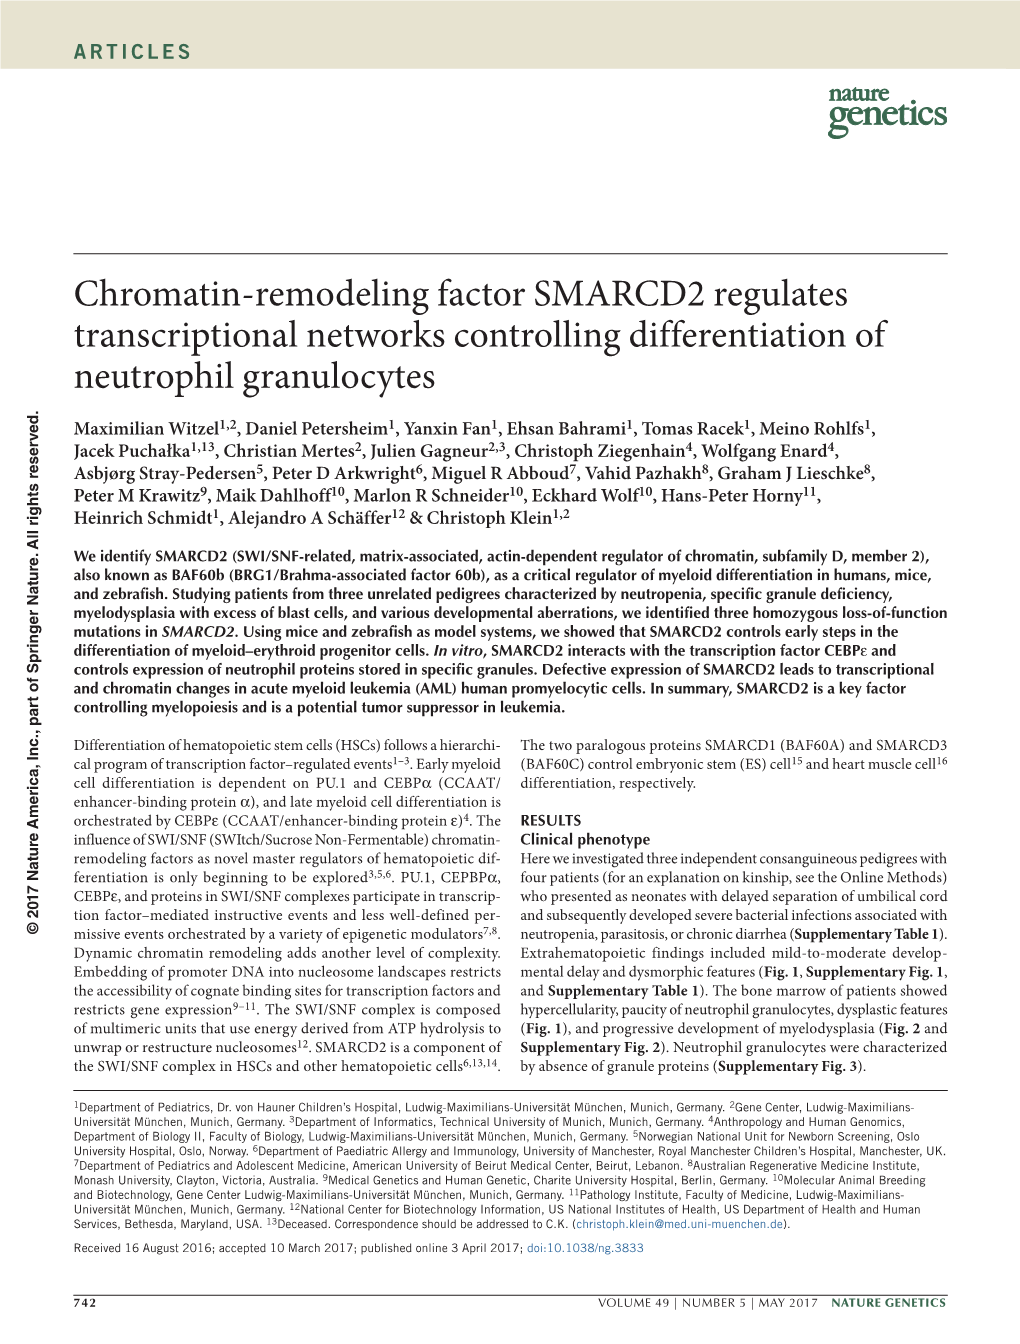 Chromatin-Remodeling Factor SMARCD2 Regulates Transcriptional Networks Controlling Differentiation of Neutrophil Granulocytes